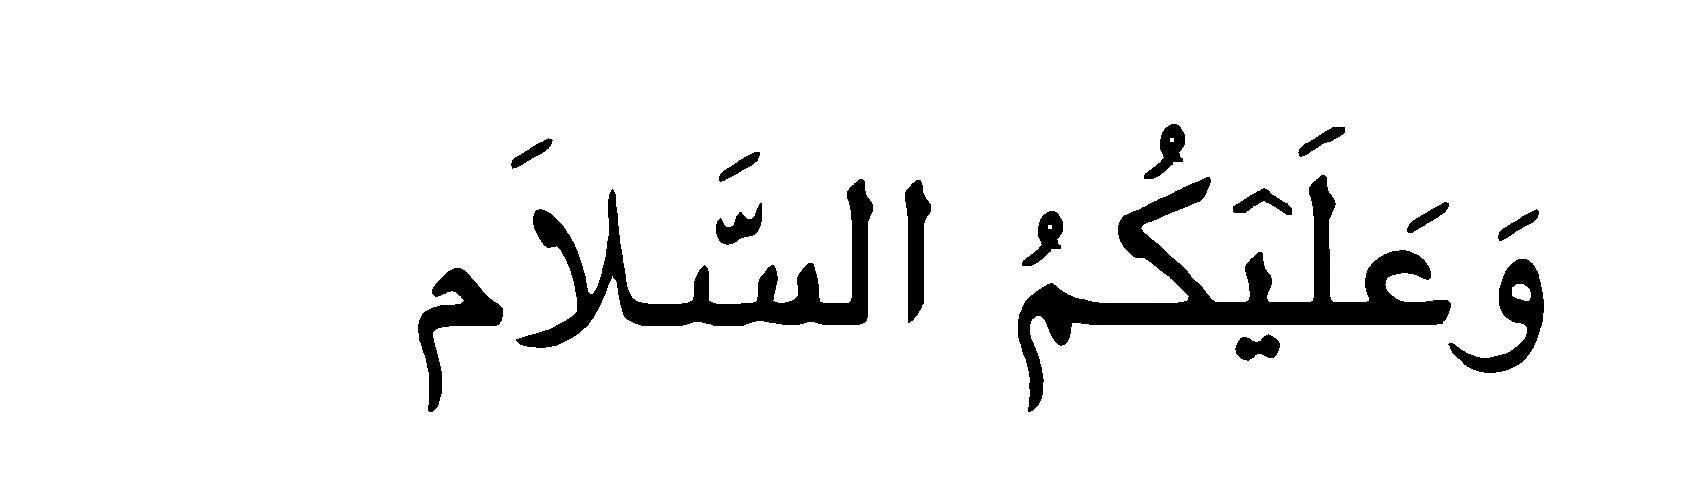 Арабский язык открытка. Салям на арабском. Салам алейкум на арабском. Приветствие на арабском языке. АС саляму алейкум на арабском языке.